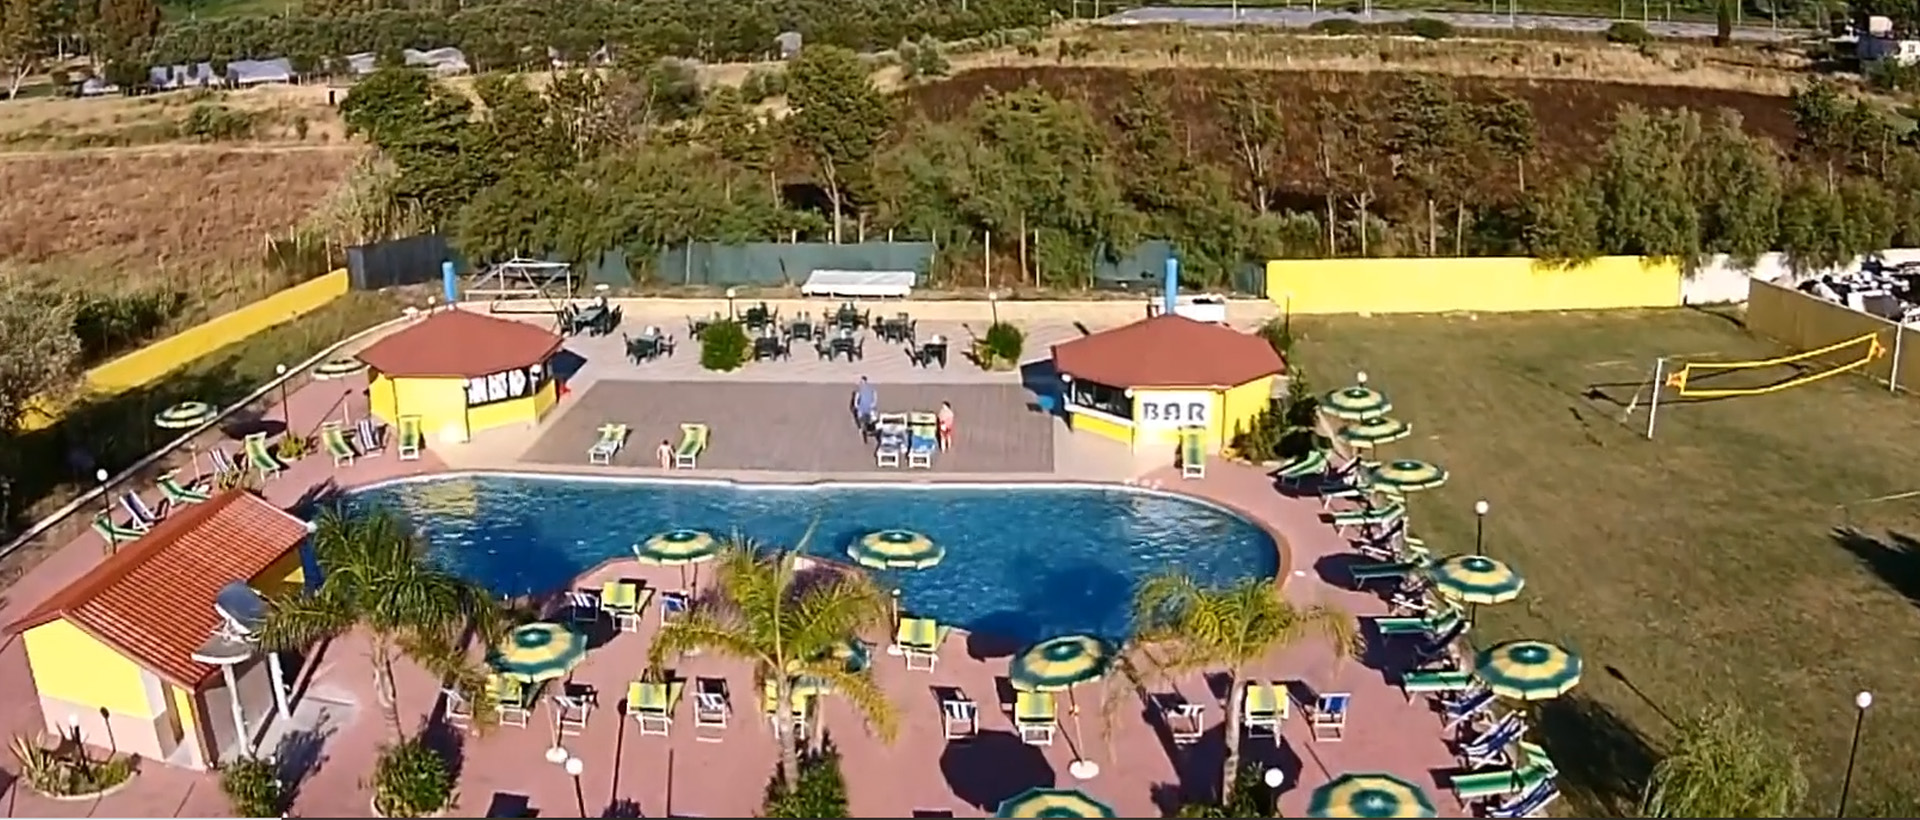 VMhotel Napeto - The Pool